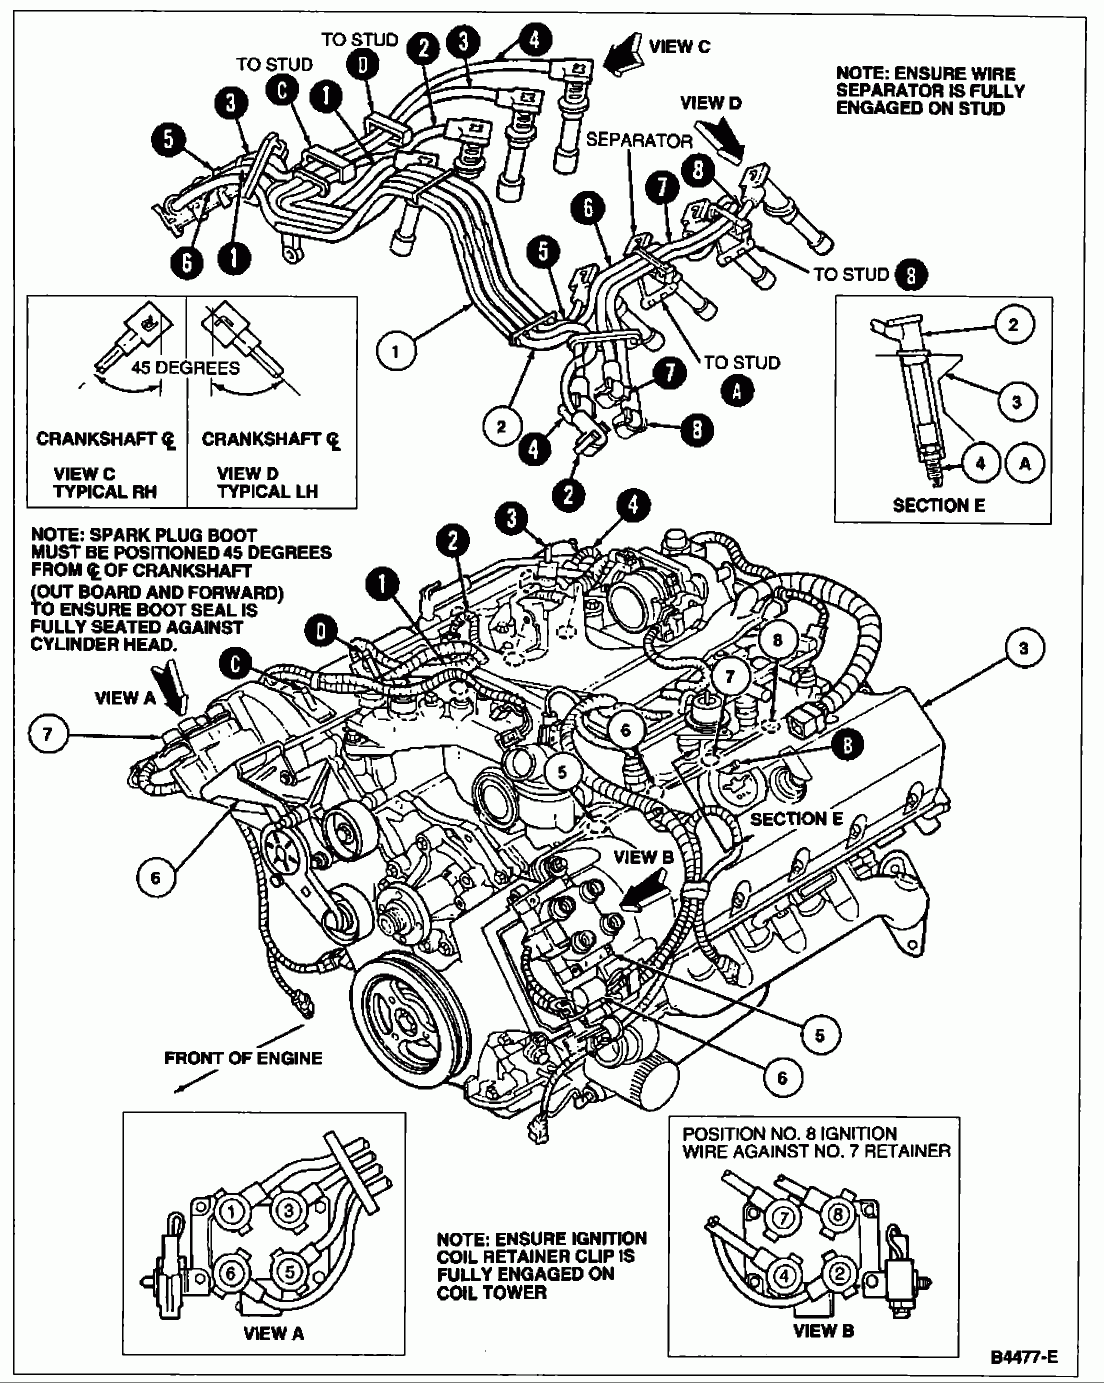 Xt_2171] Ford Explorer Engine Diagram 96 Ford F 150 Ford